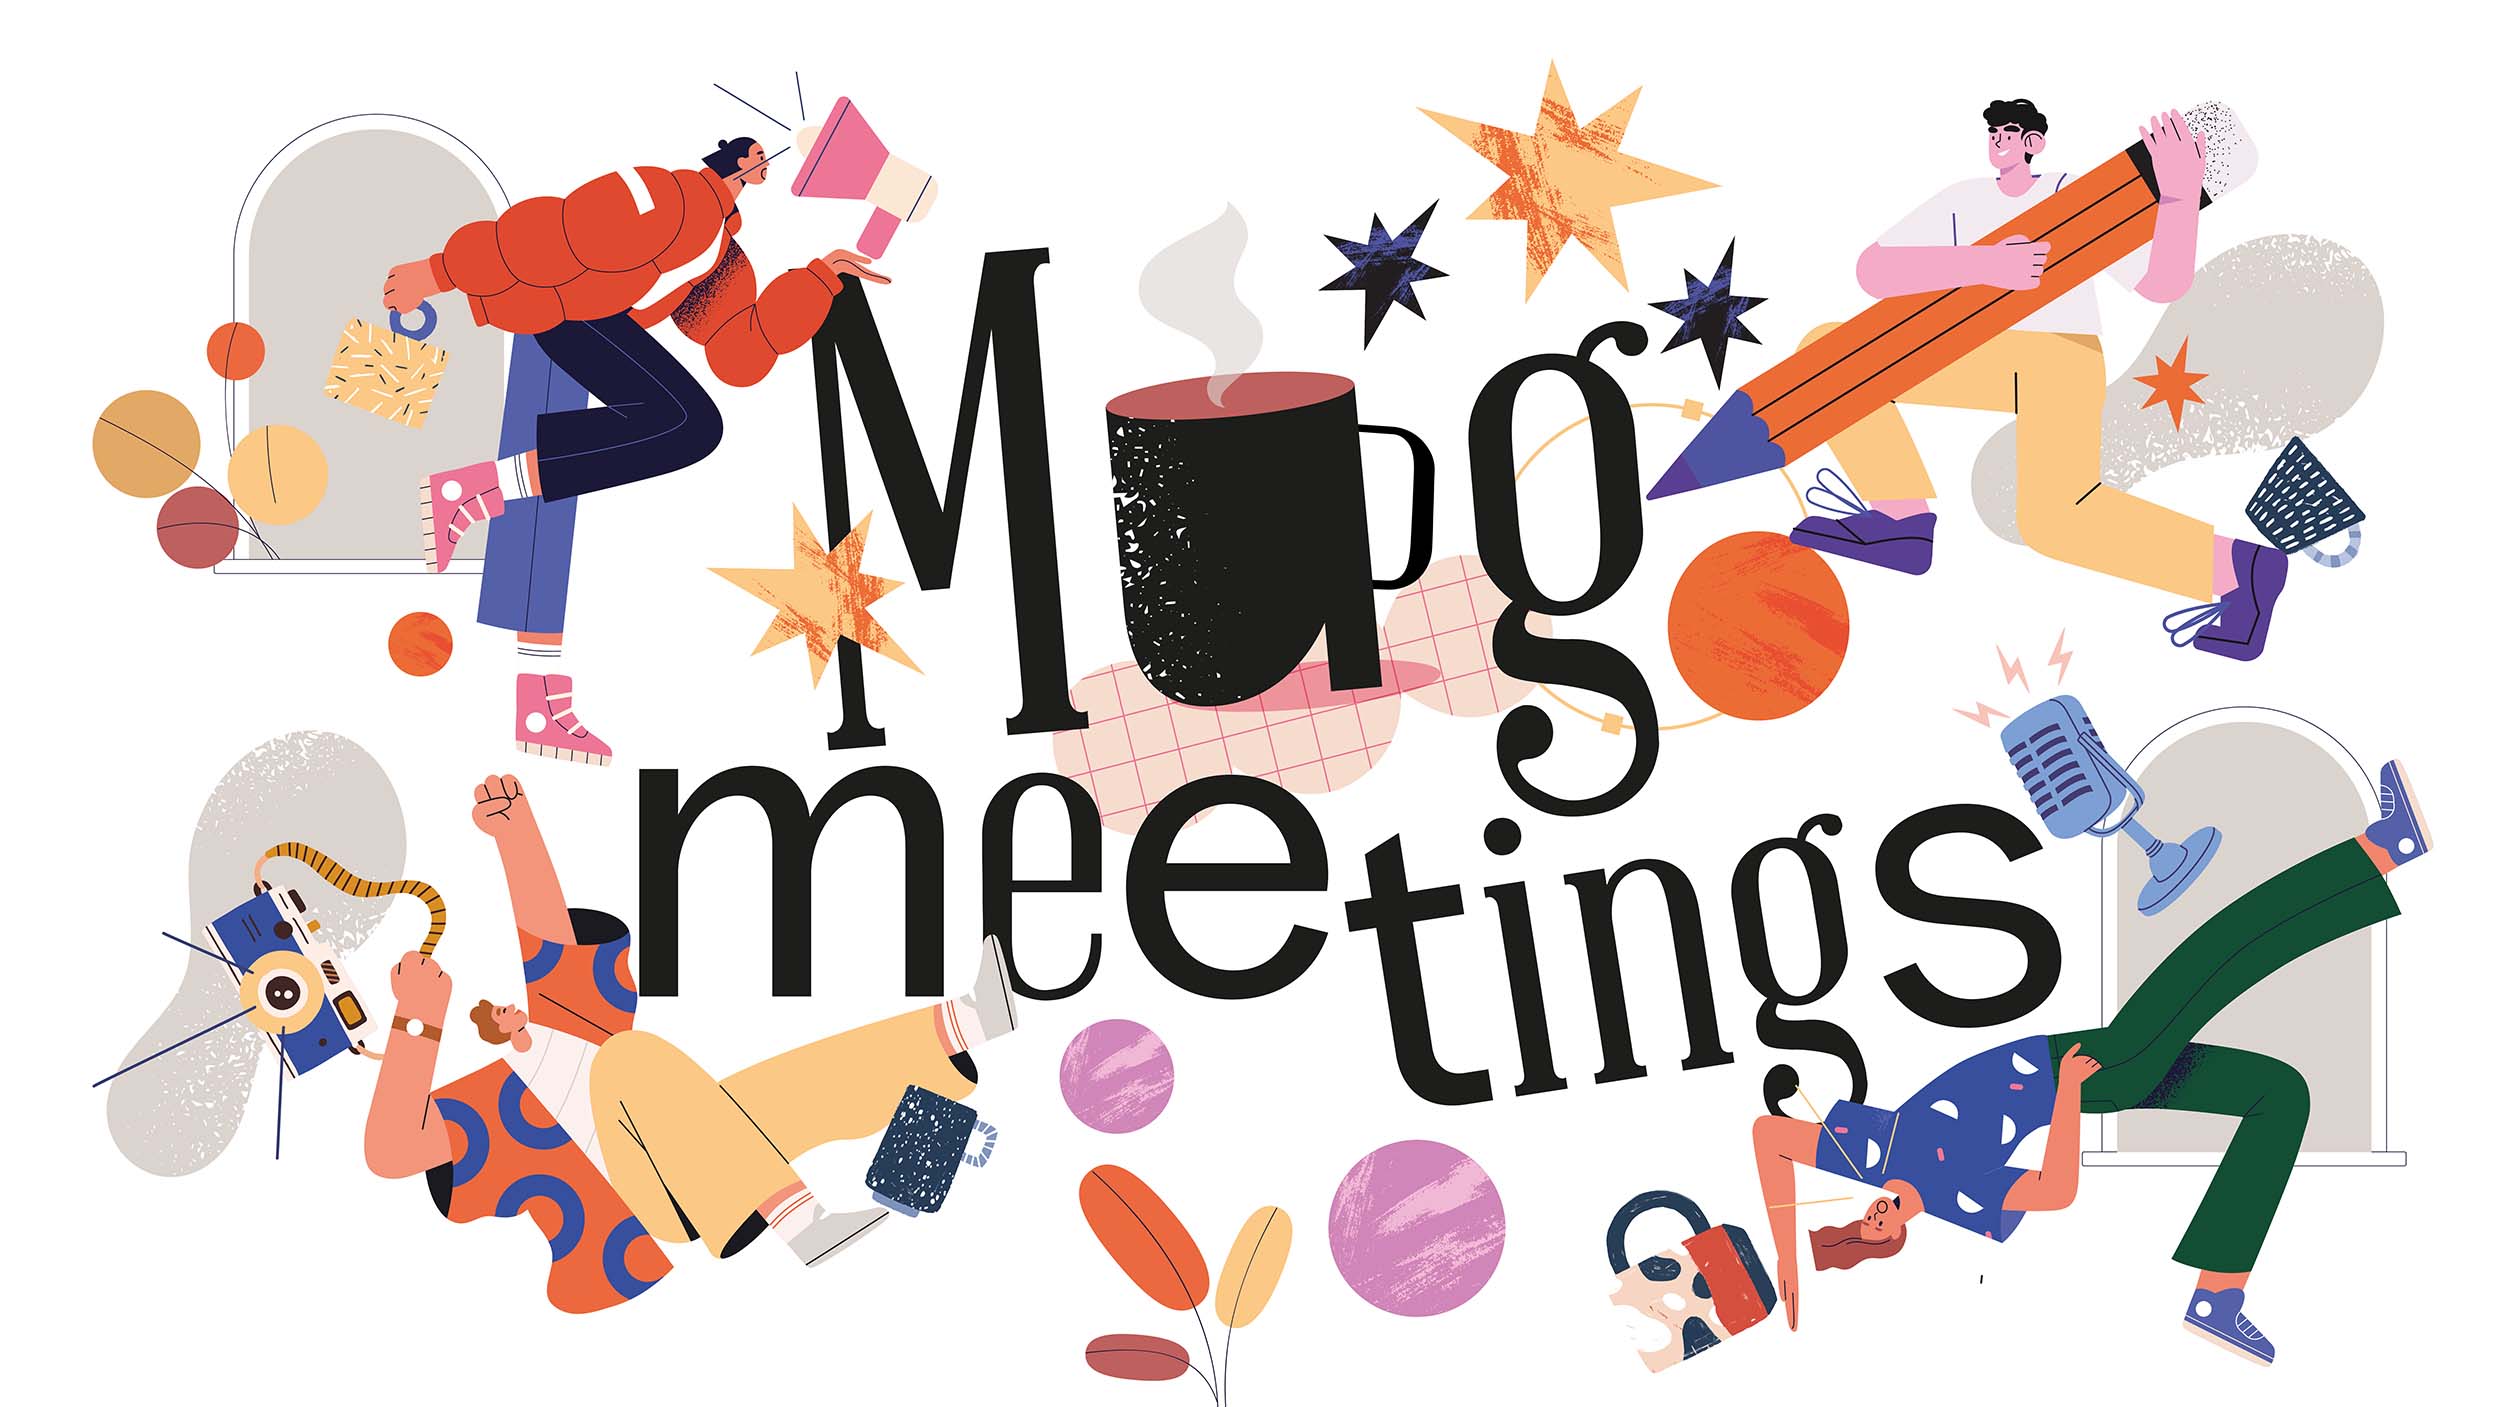 Mug meetings